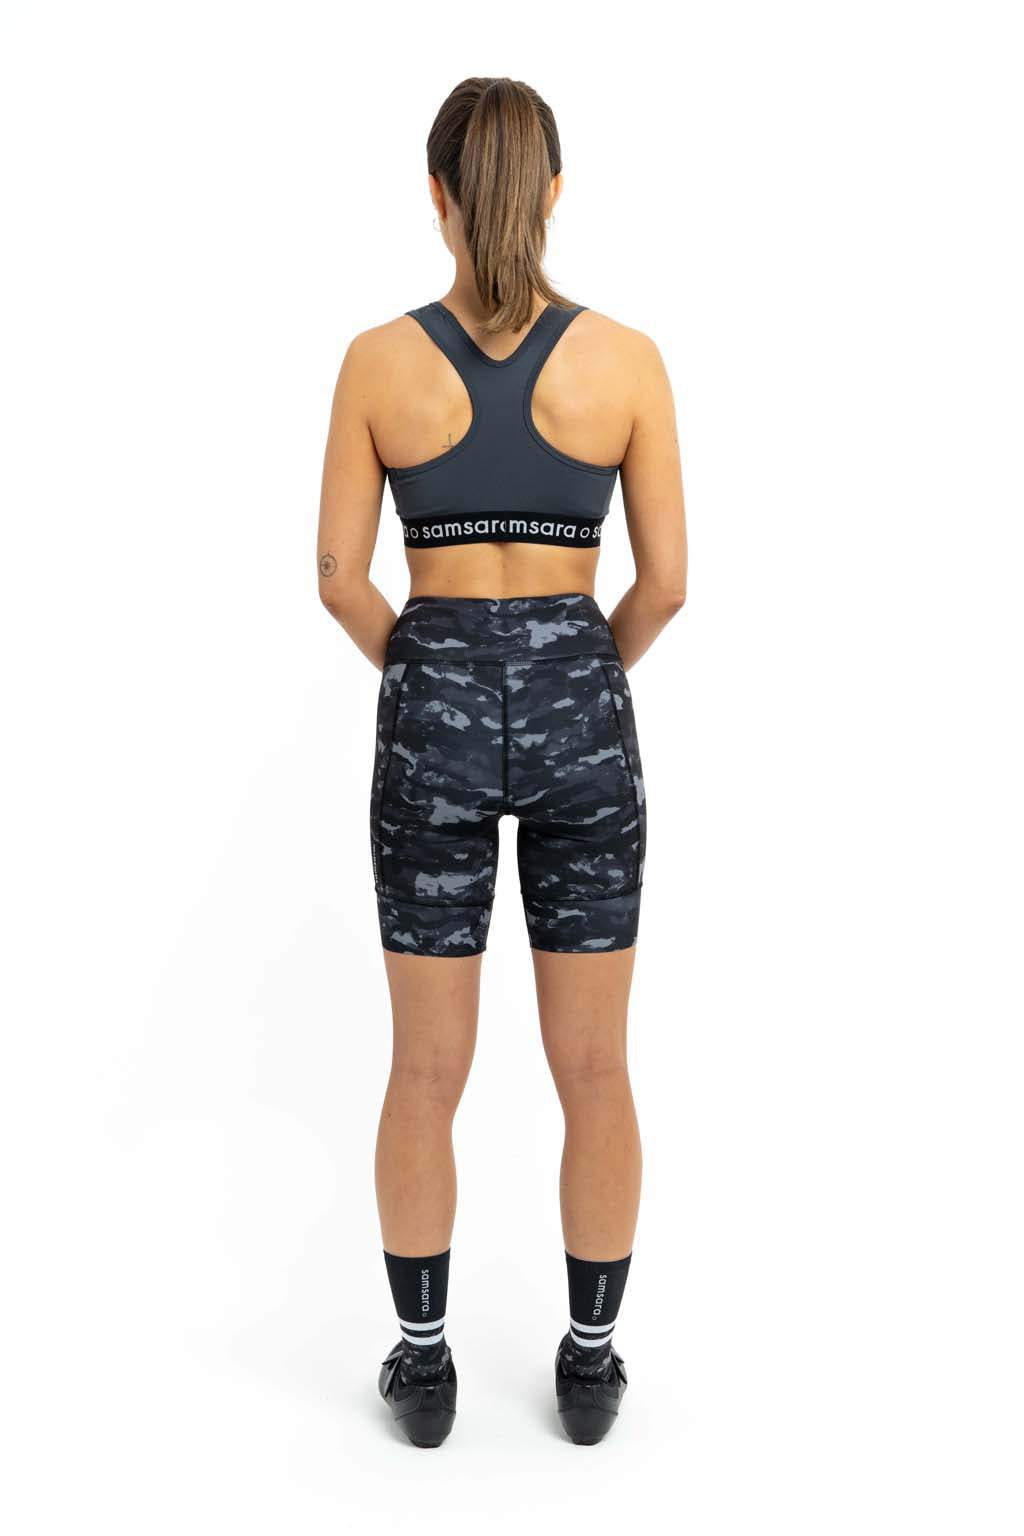 Women's Cycling Shorts - Low Profile Padding, Monochrome Camo